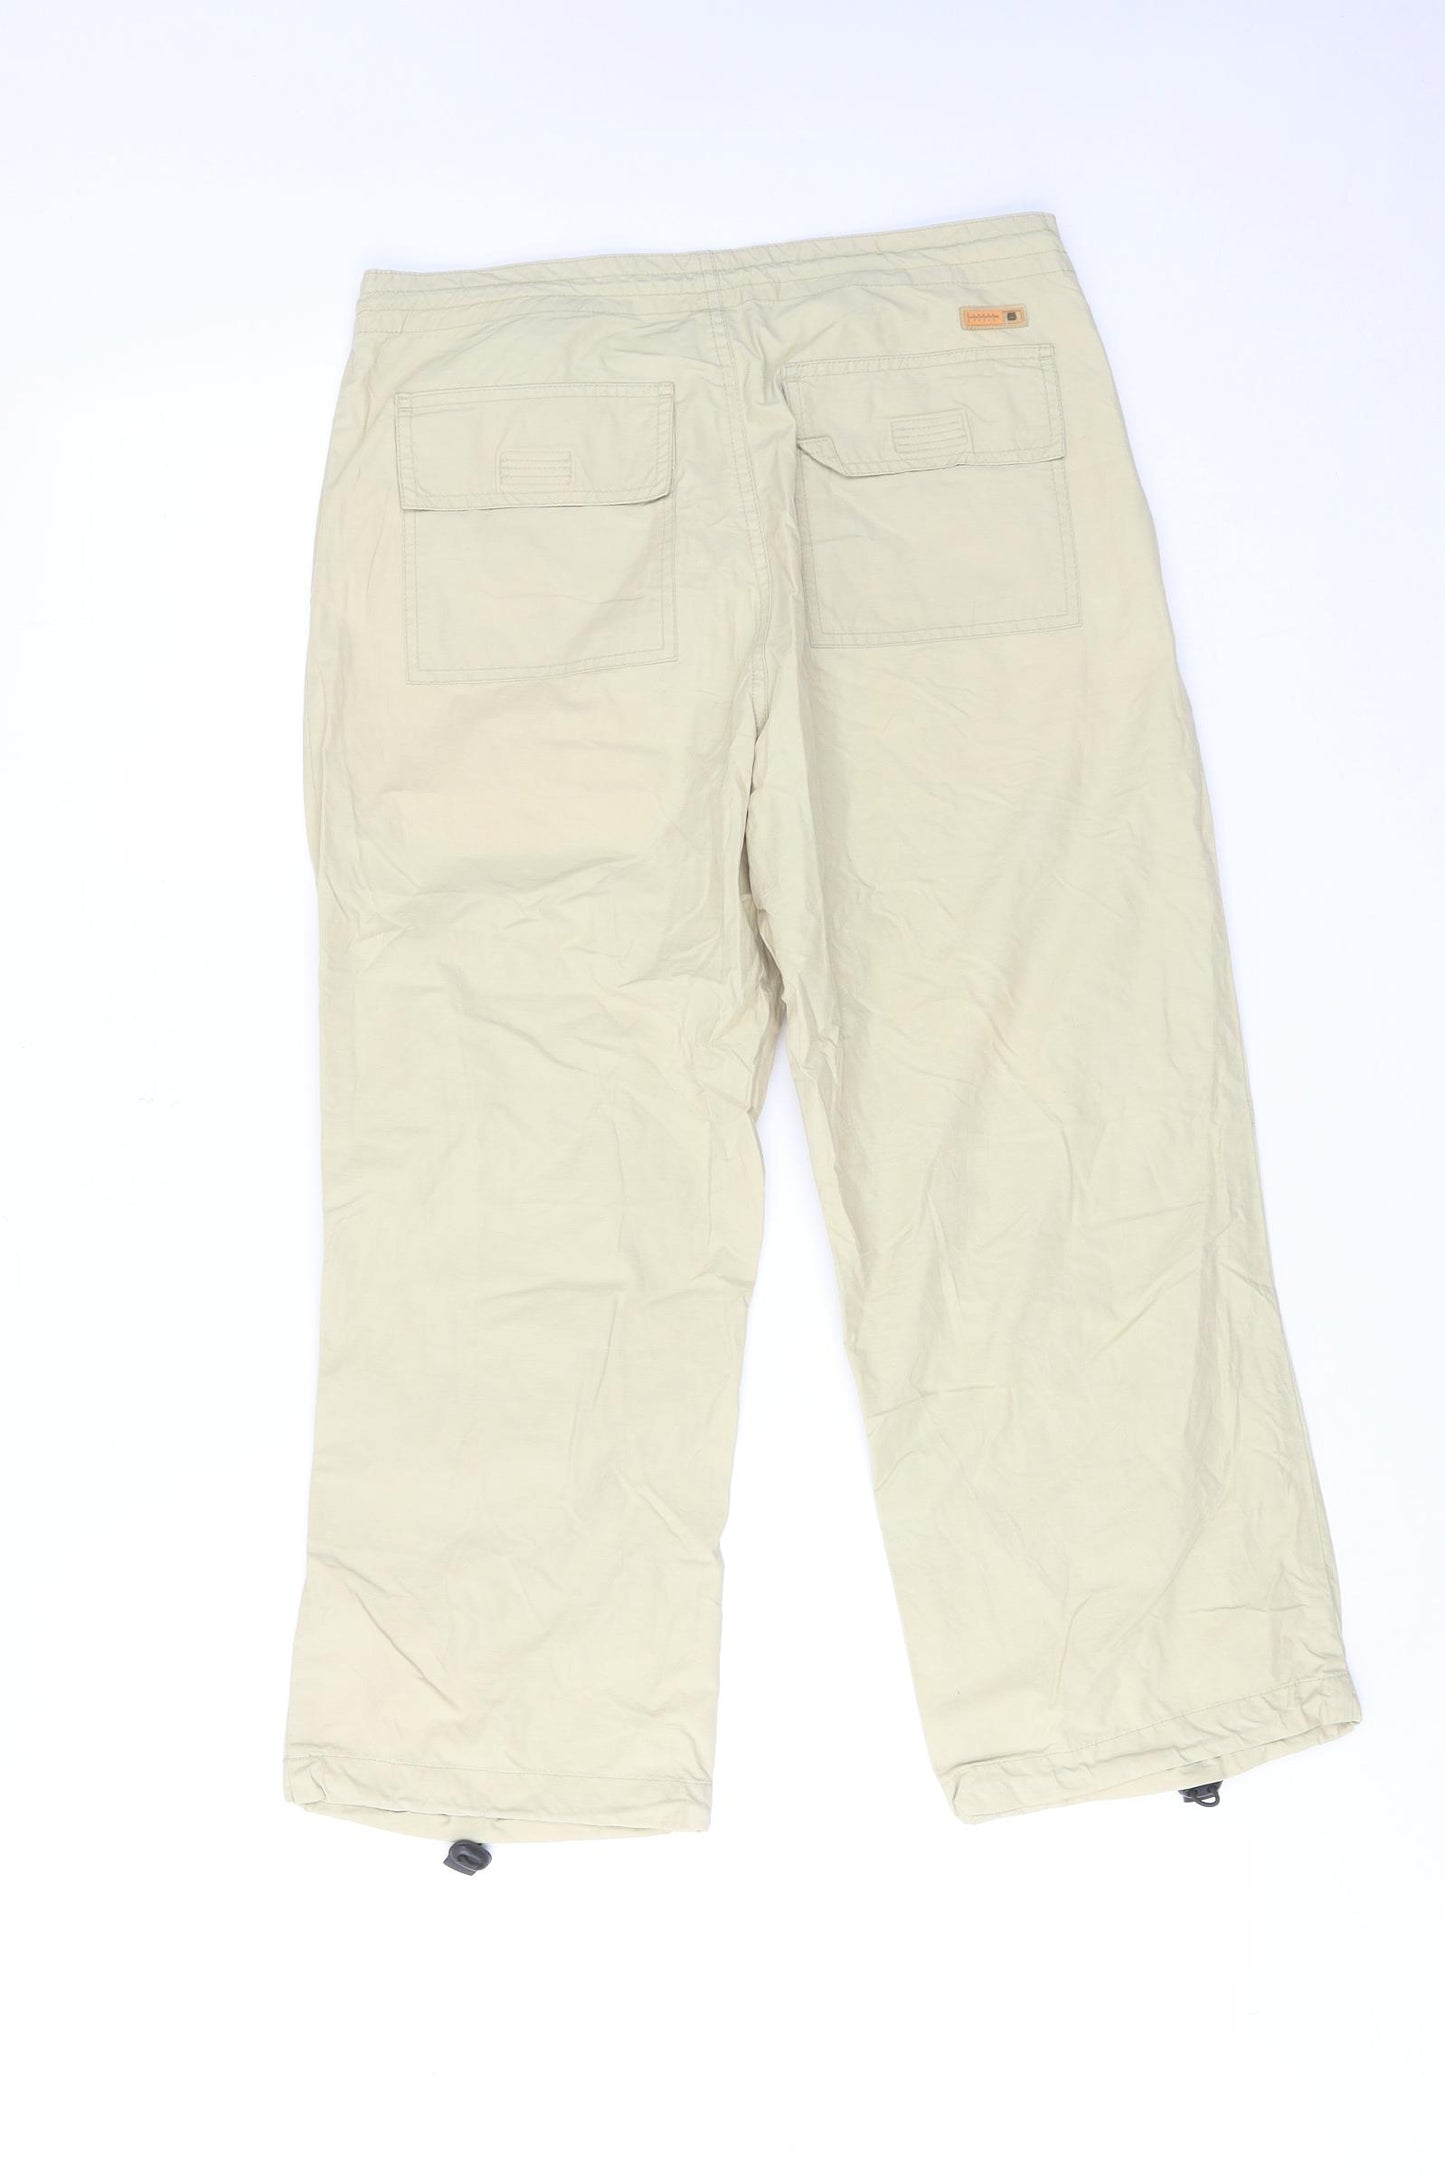 Marwin Womens Beige Cotton Trousers Size S Regular Zip - Drawstring Hem